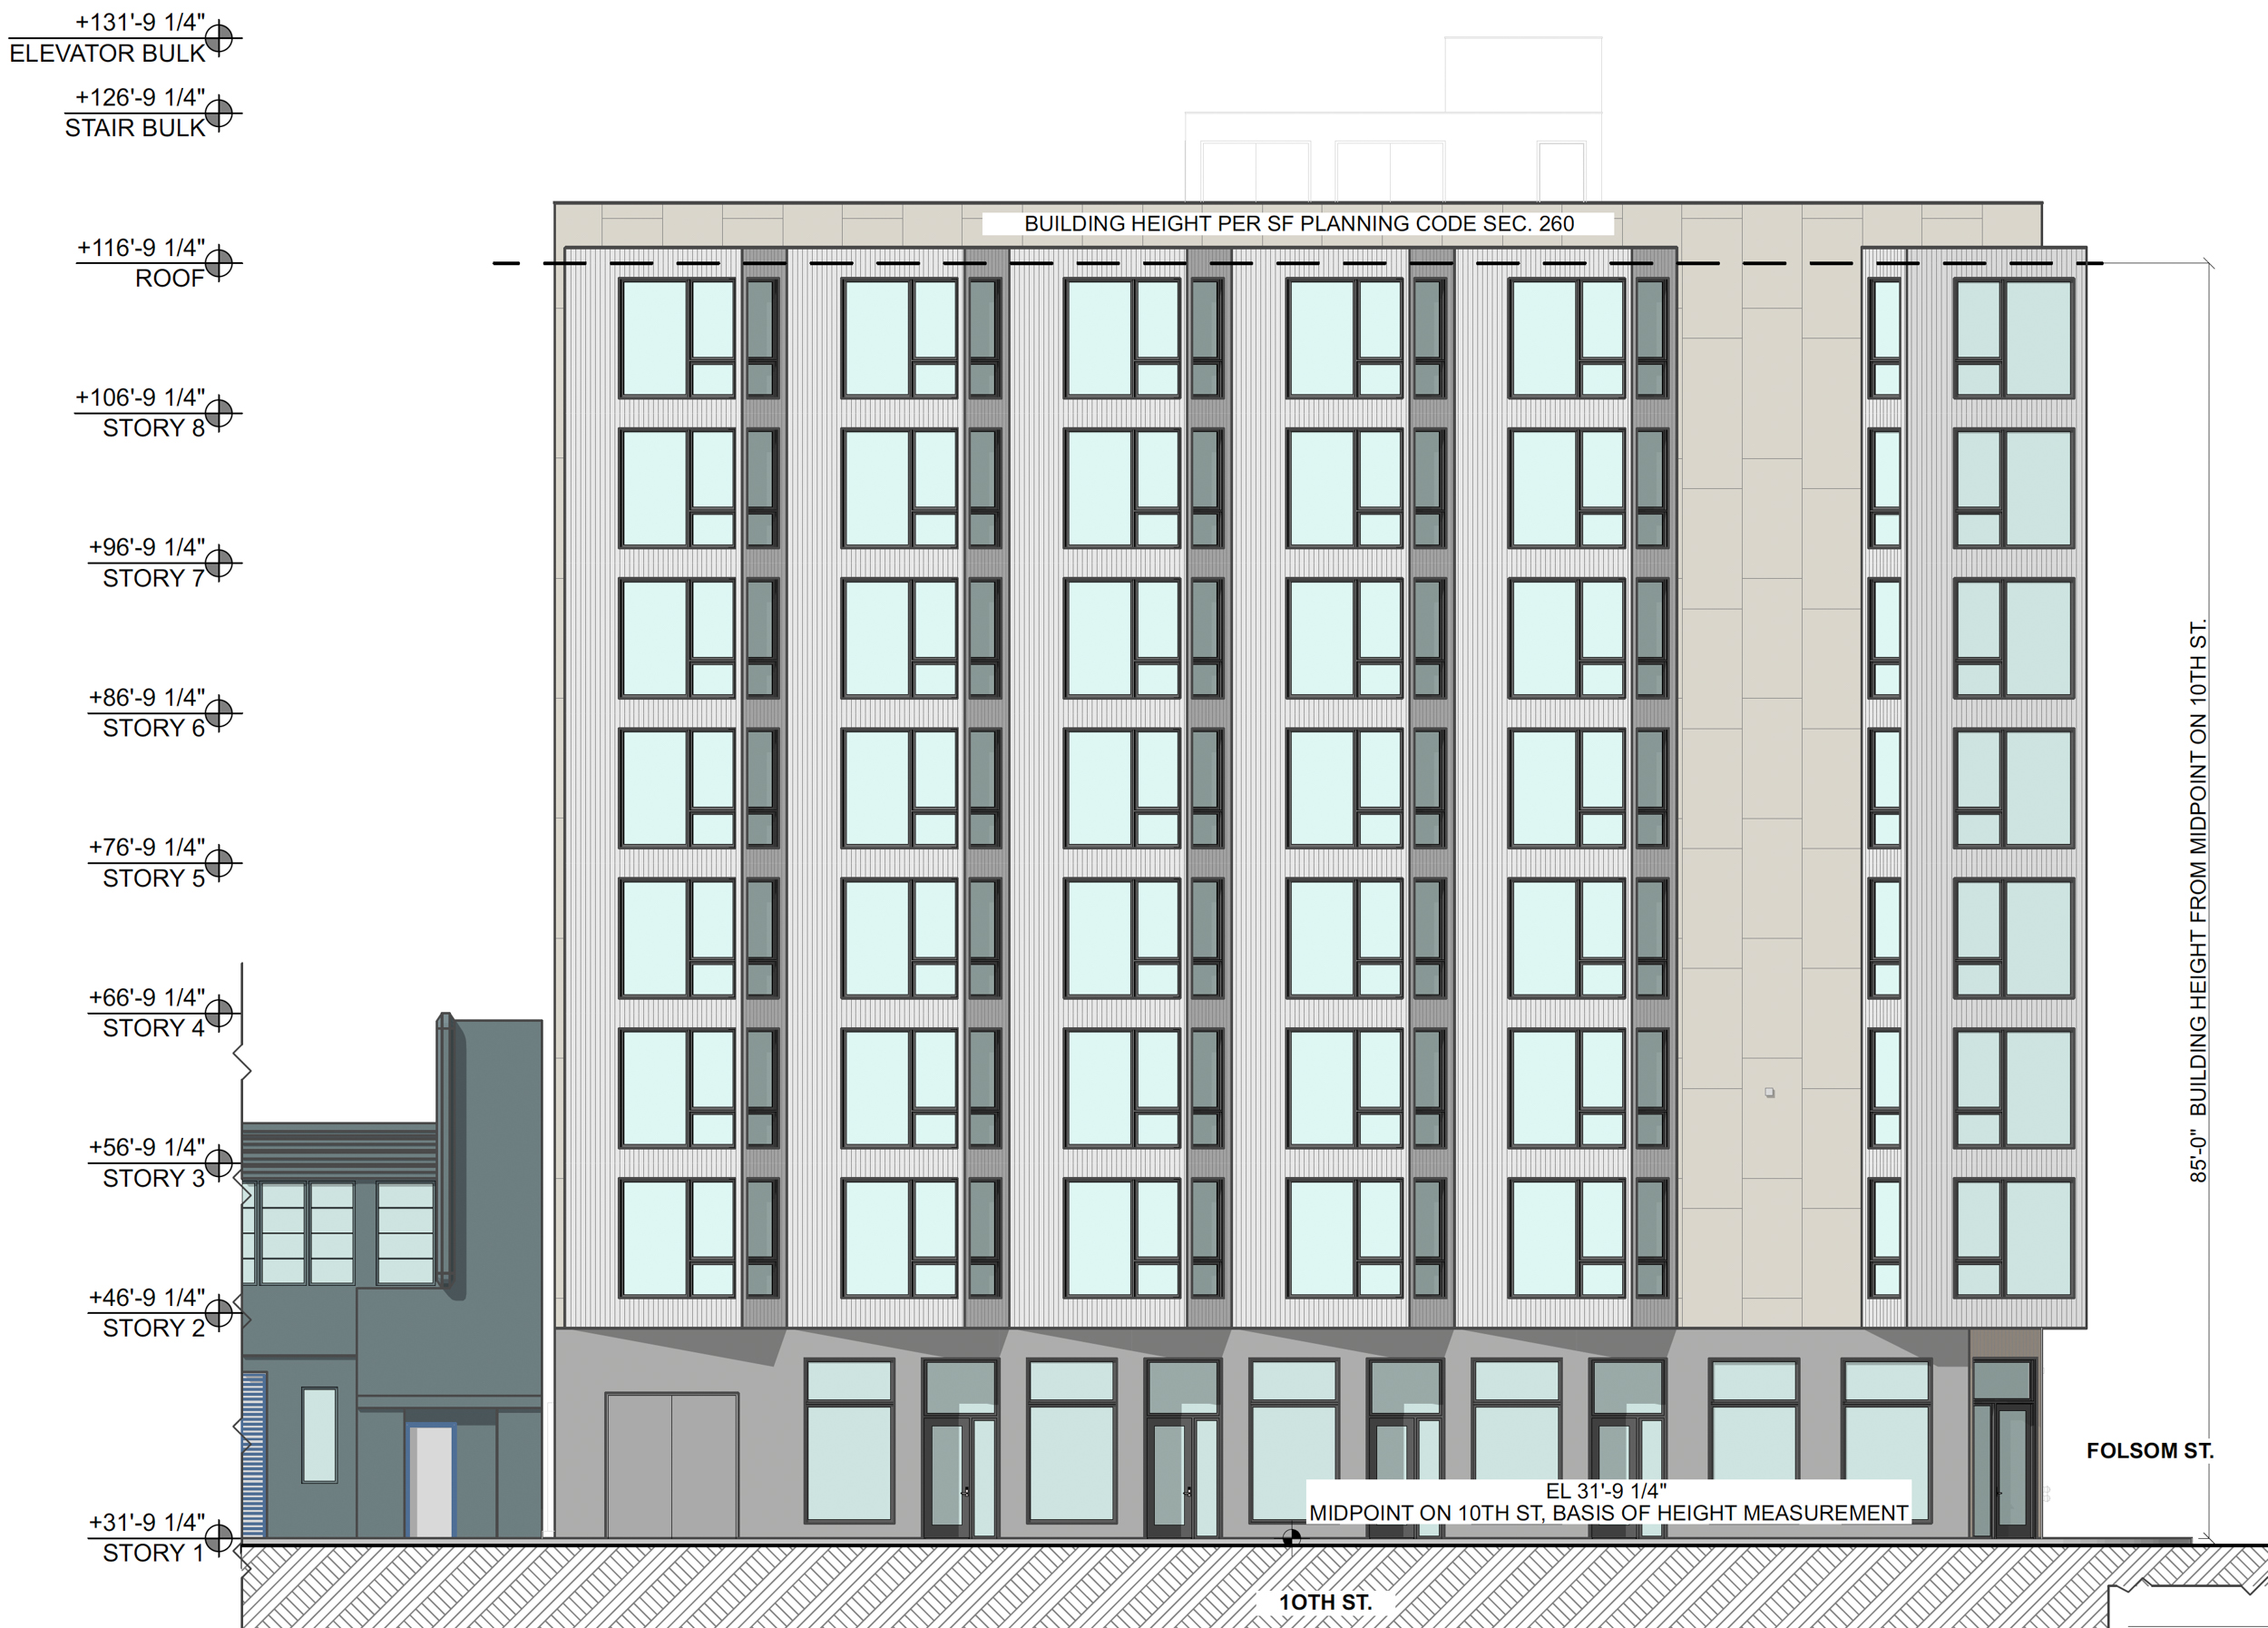 1401 Folsom Street facade elevation, illustration by RG Architecture